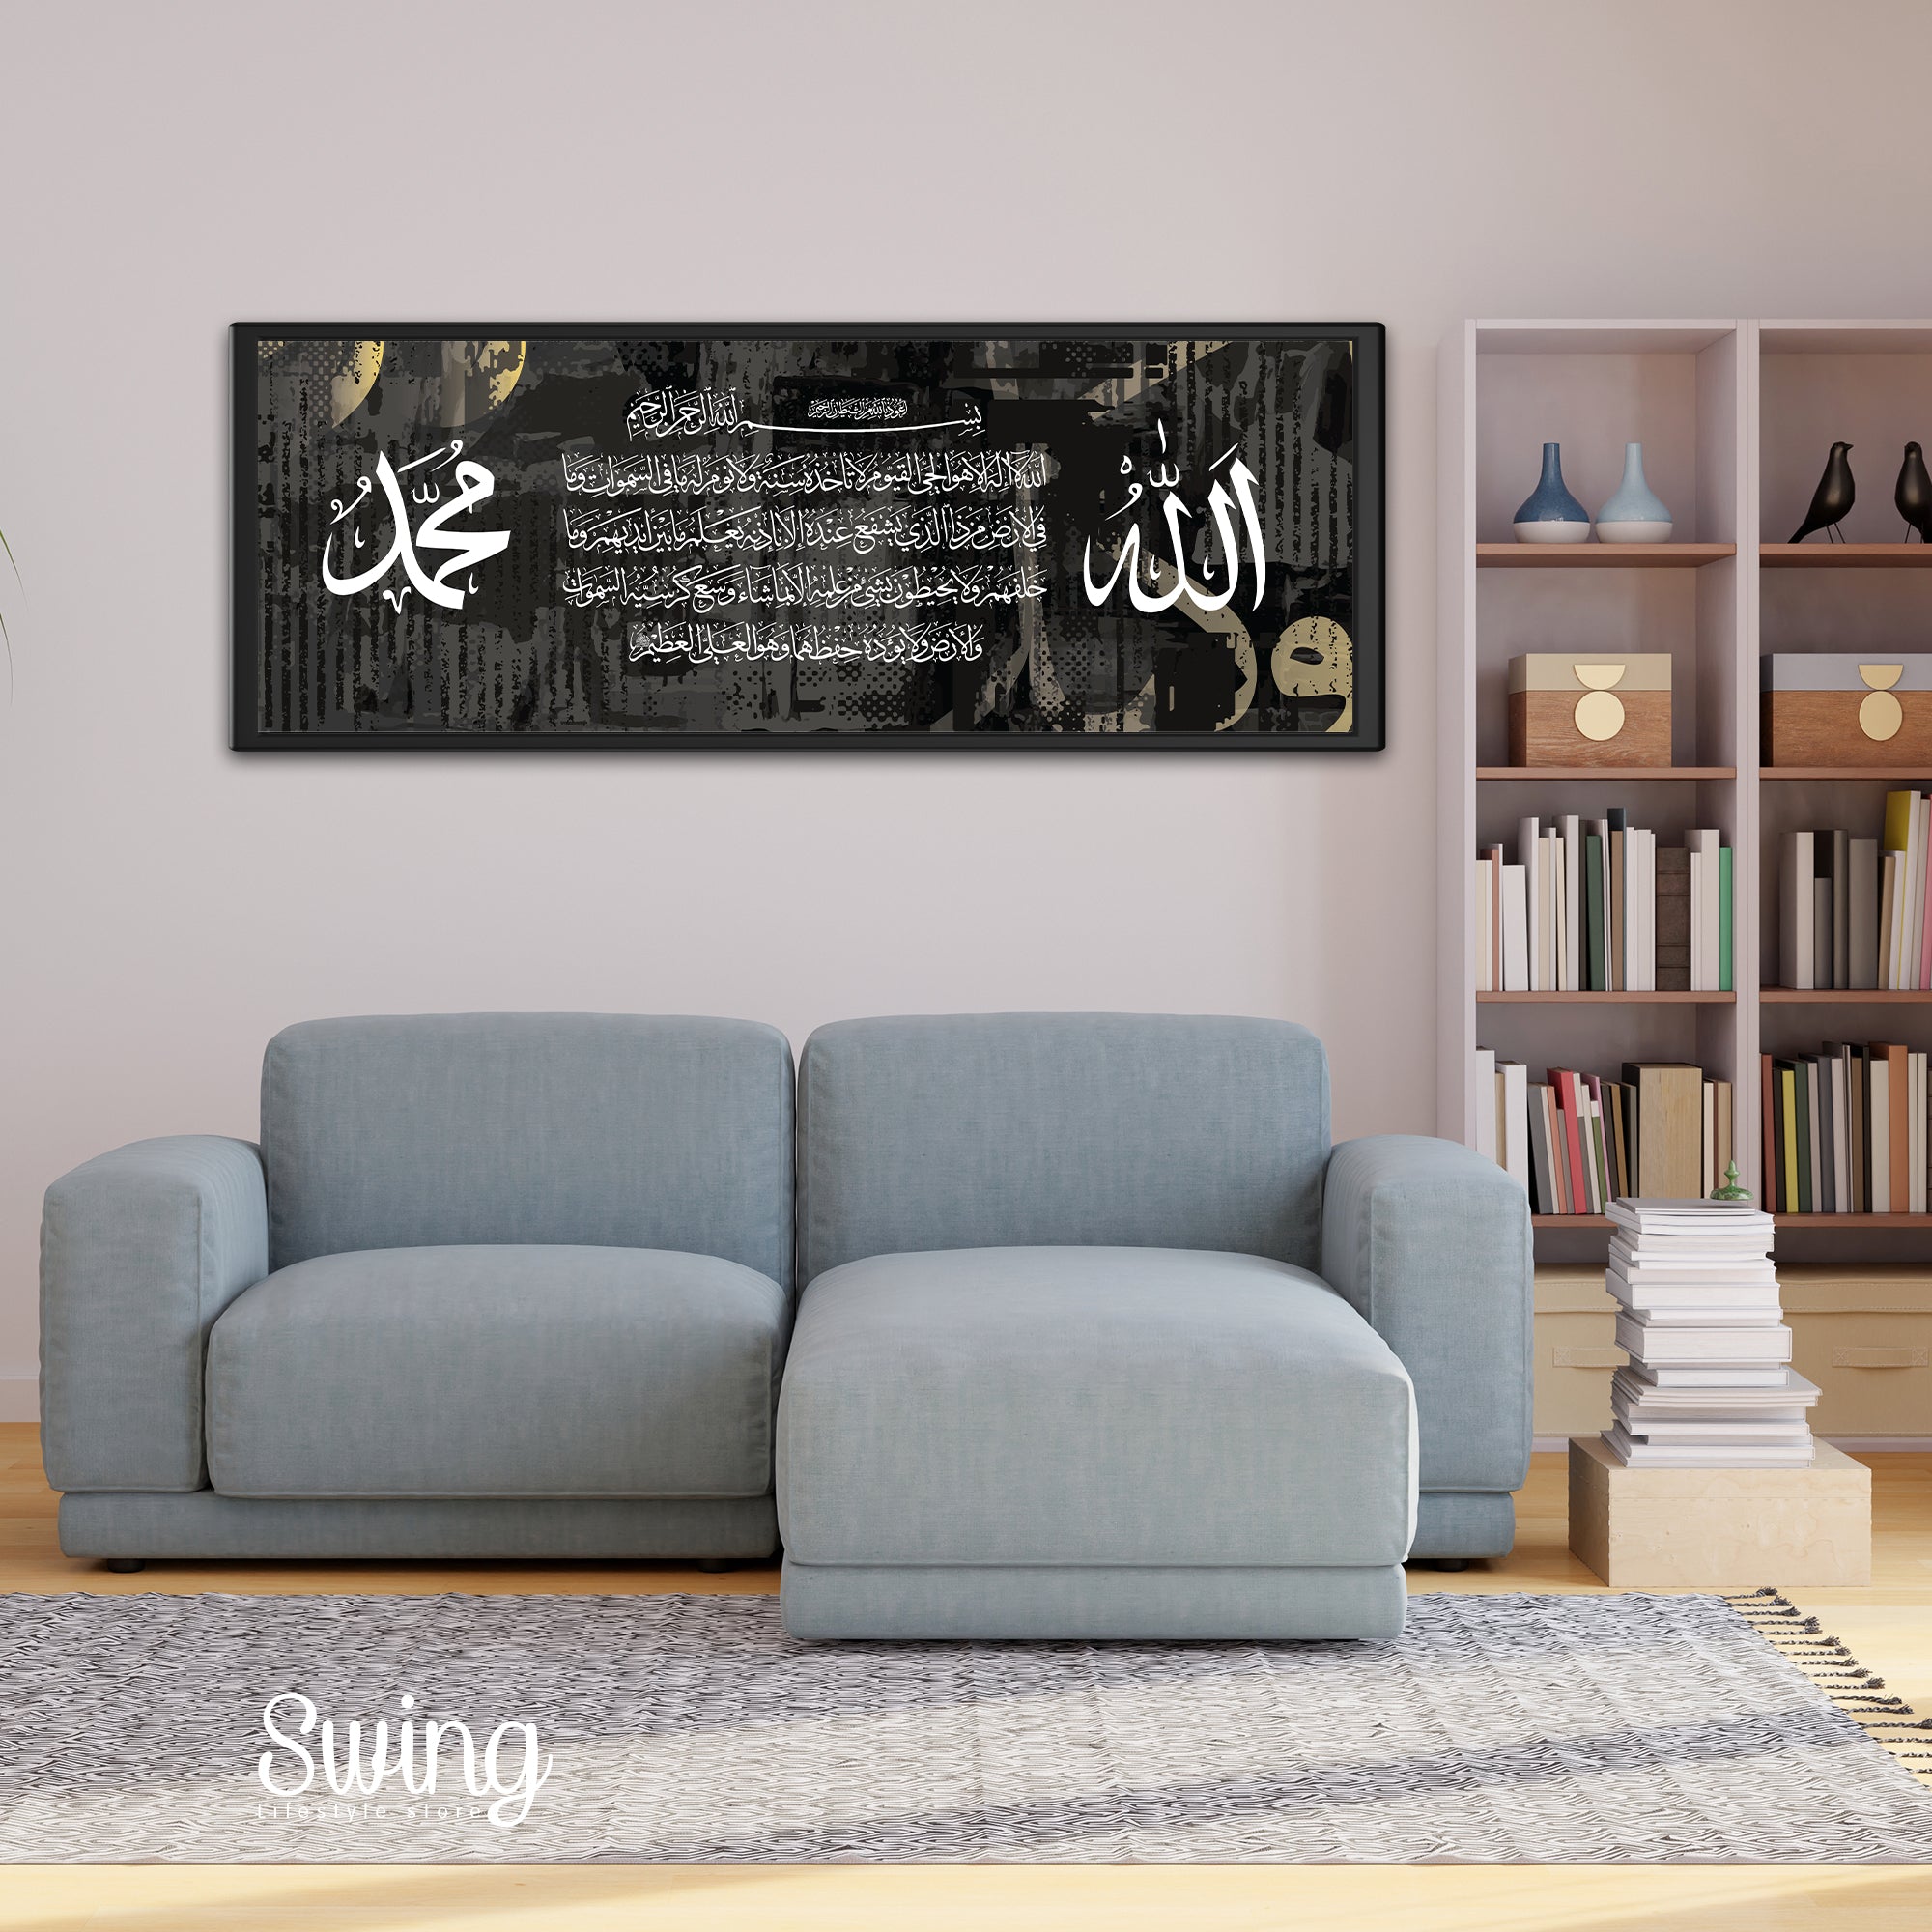 Allah, Muhammad, Ayat Kursy Long Landscape - Canvas with Wood Frame